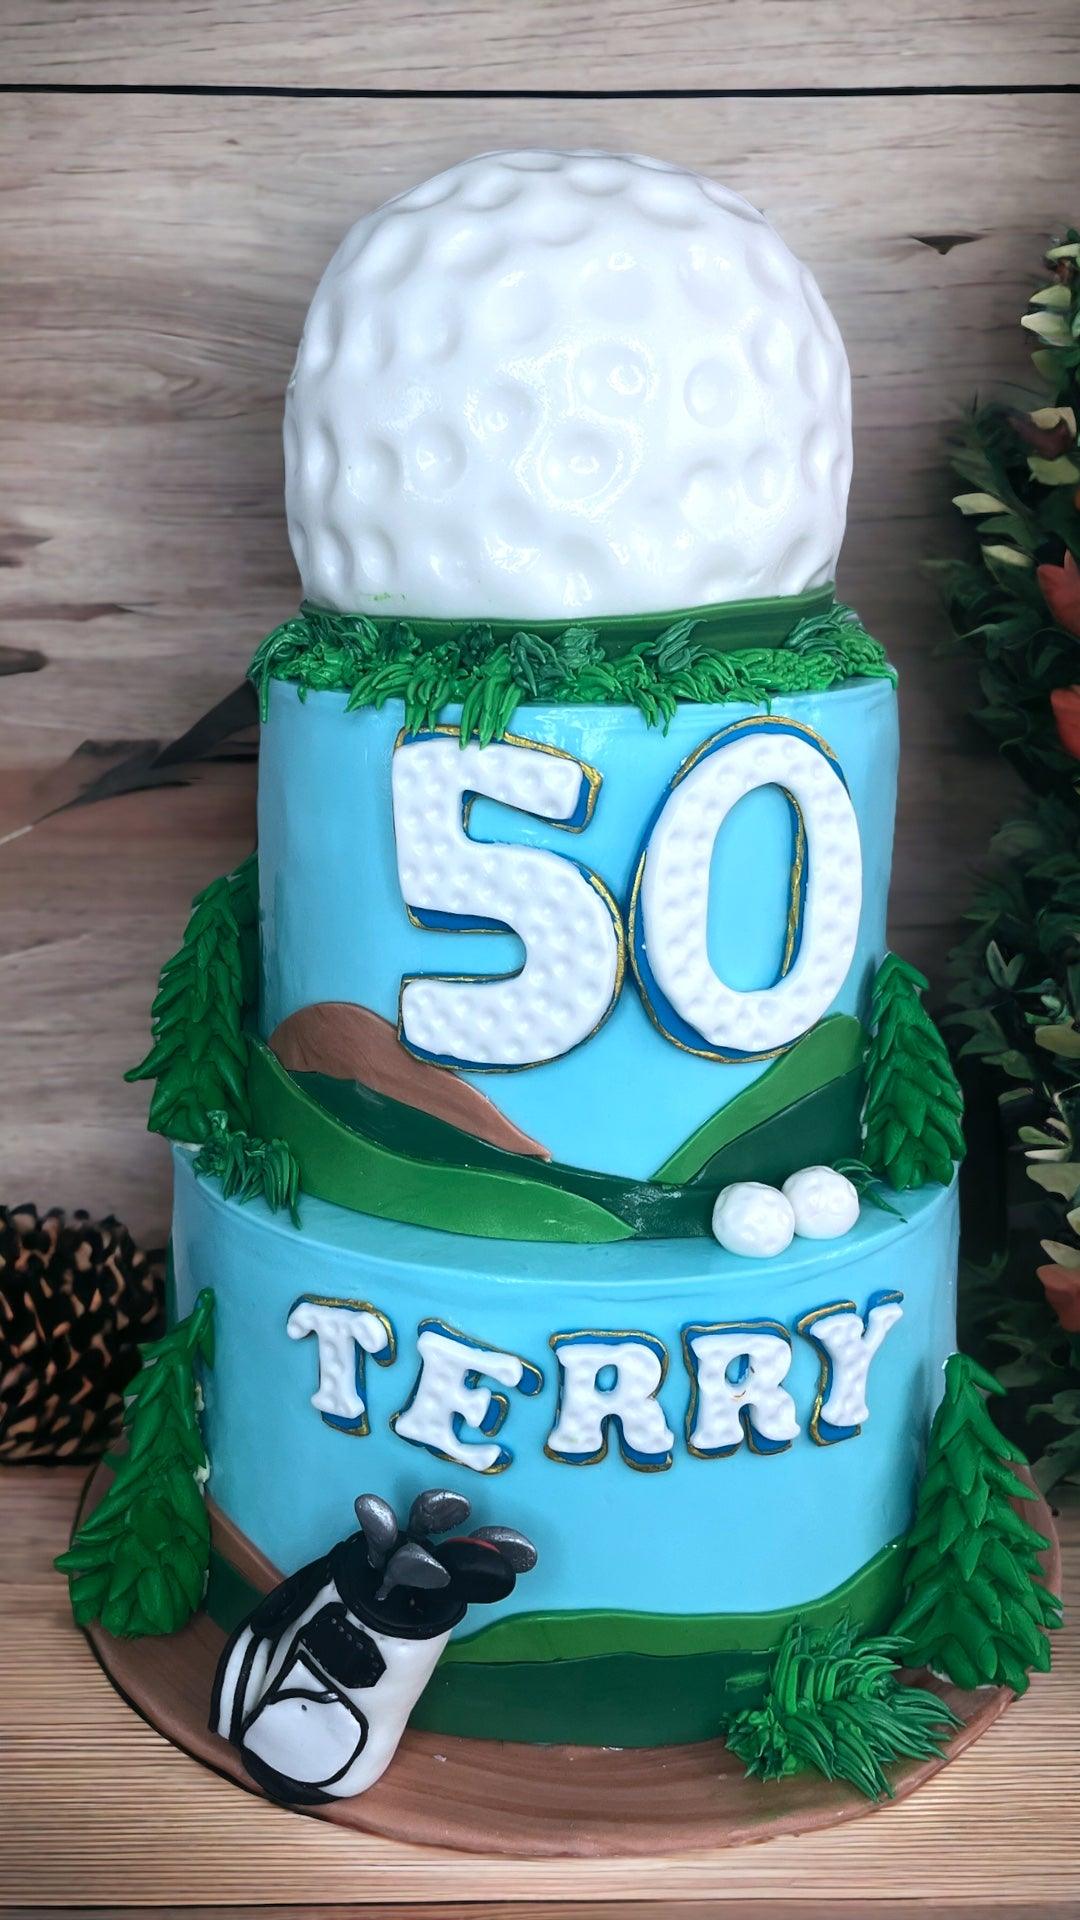 Golf theme birthday cake - Naturally_deliciousss